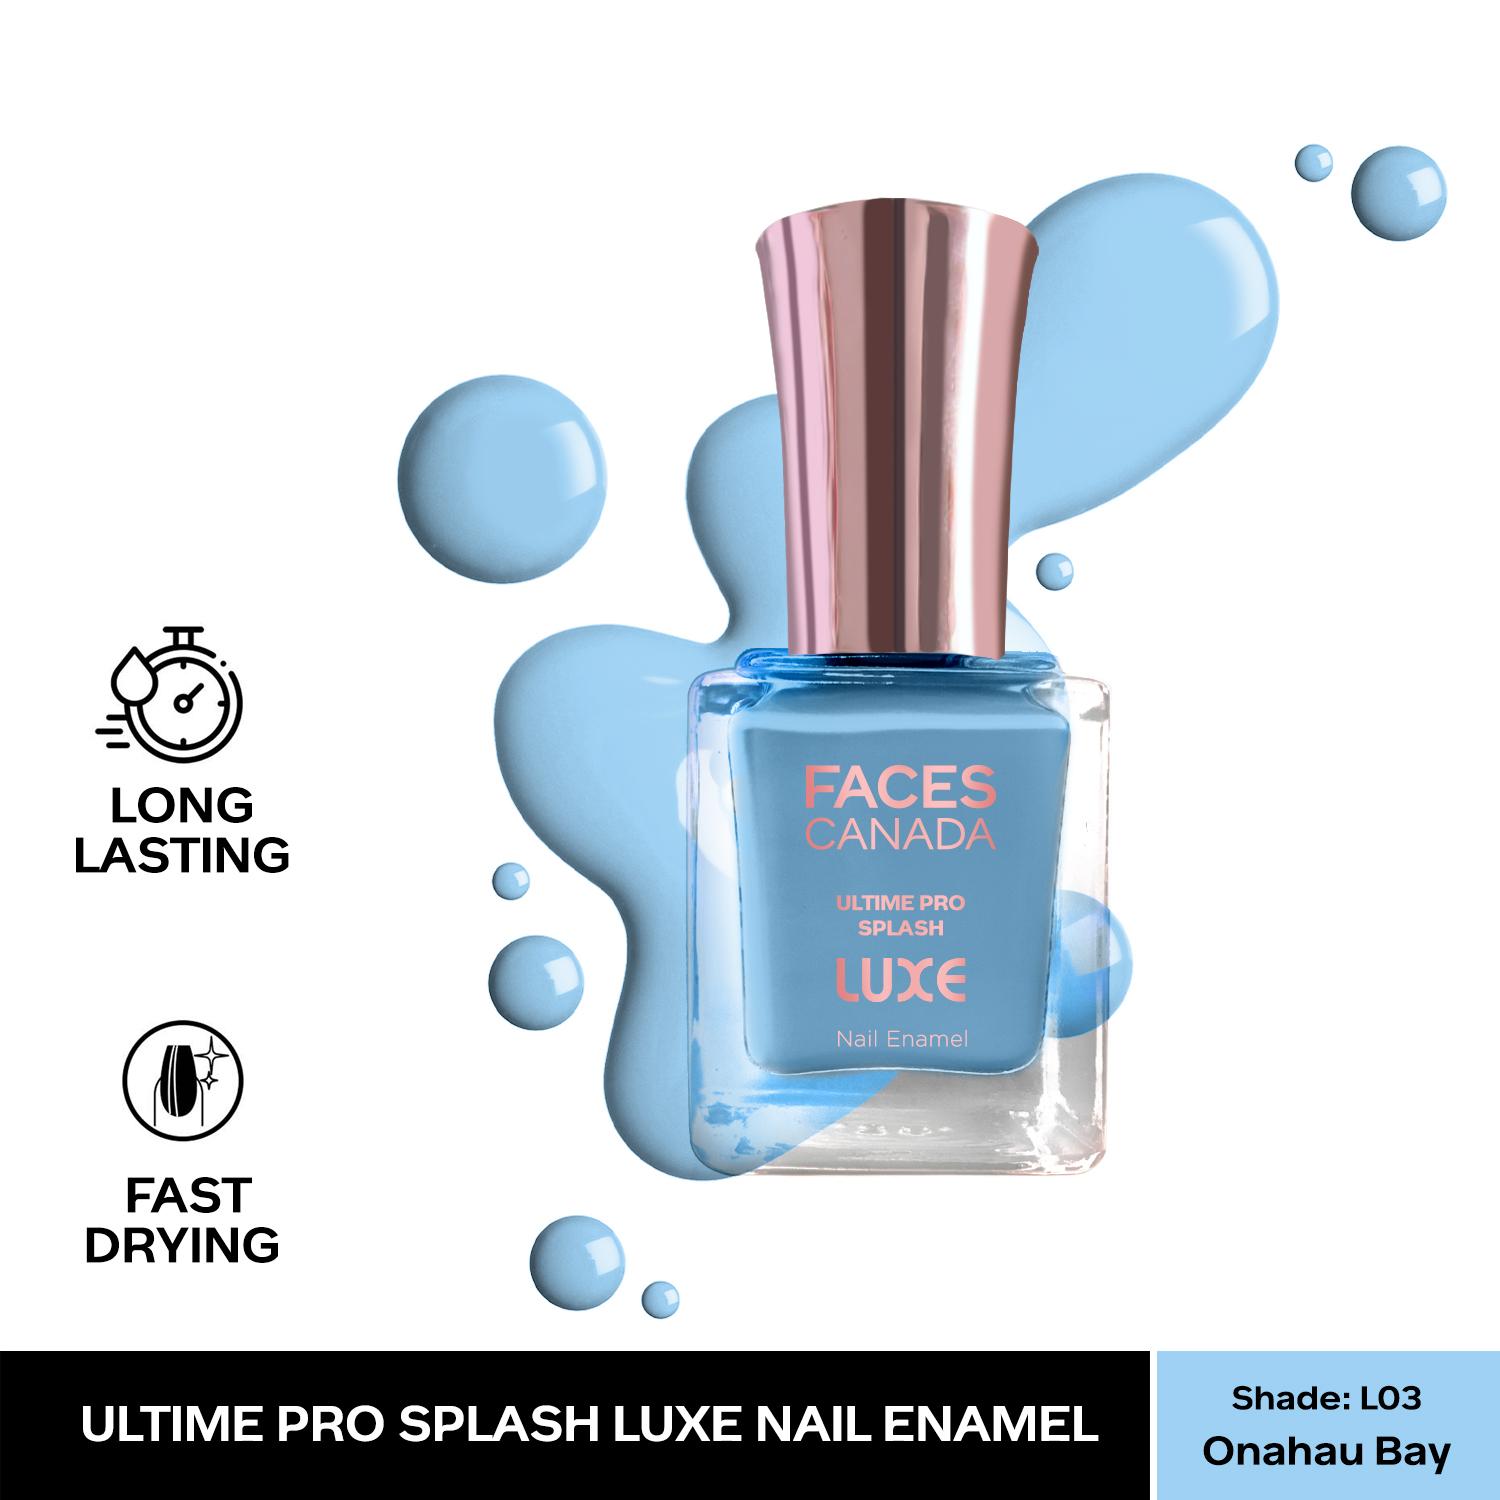 Faces Canada | Faces Canada Ultime Pro Splash Luxe Nail Enamel - Onahau Bay (L03), Glossy Finish (12 ml)